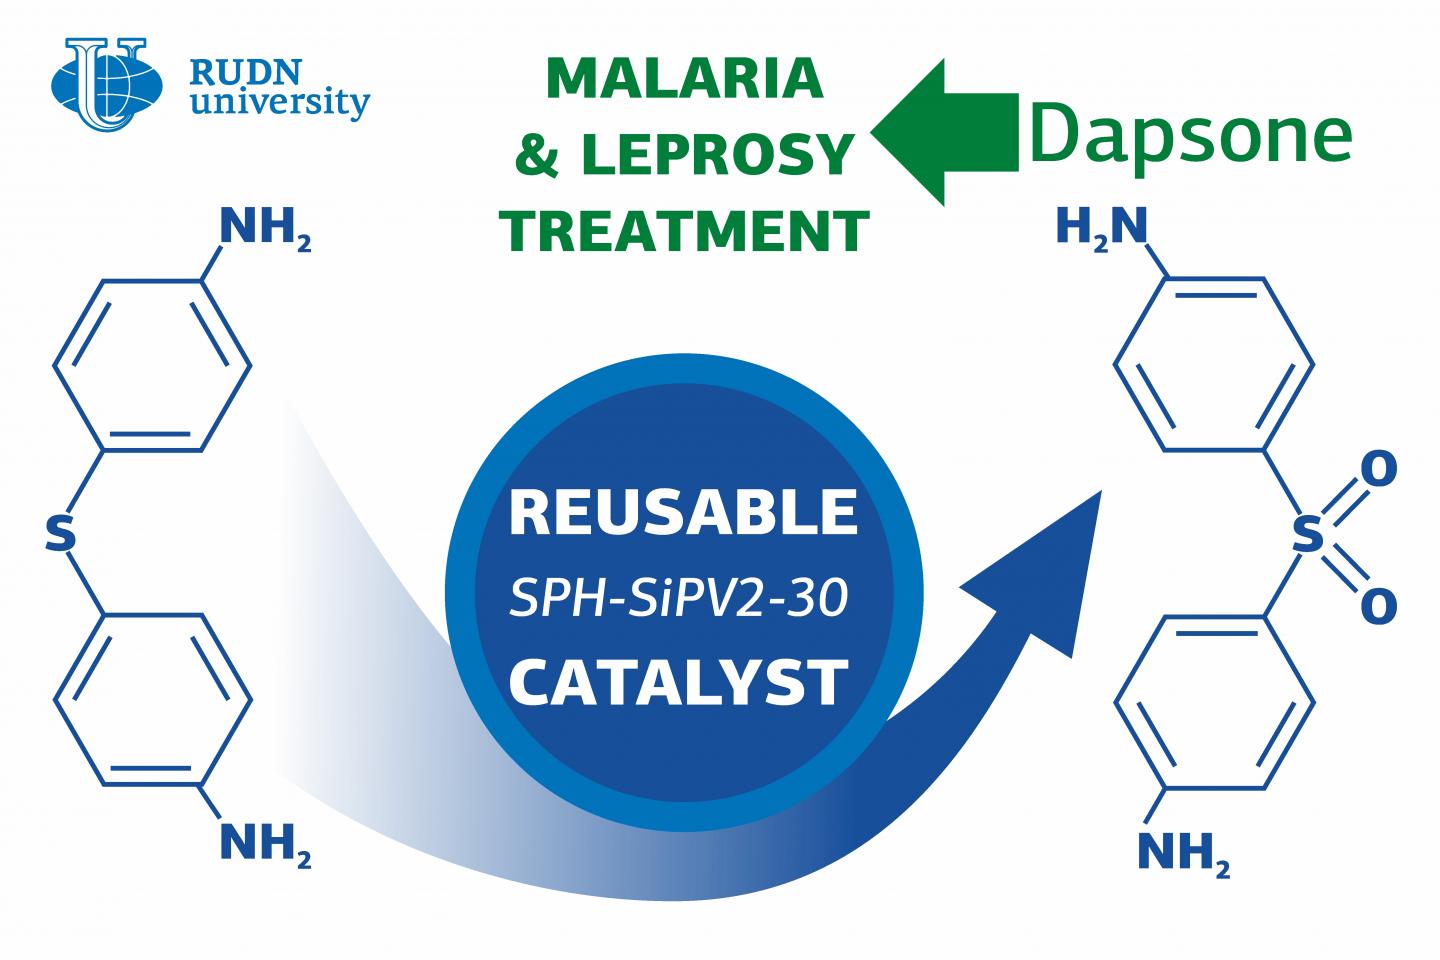 RUDN University Chemist Developed Green Method for Malaria and Leprosy Drug Production